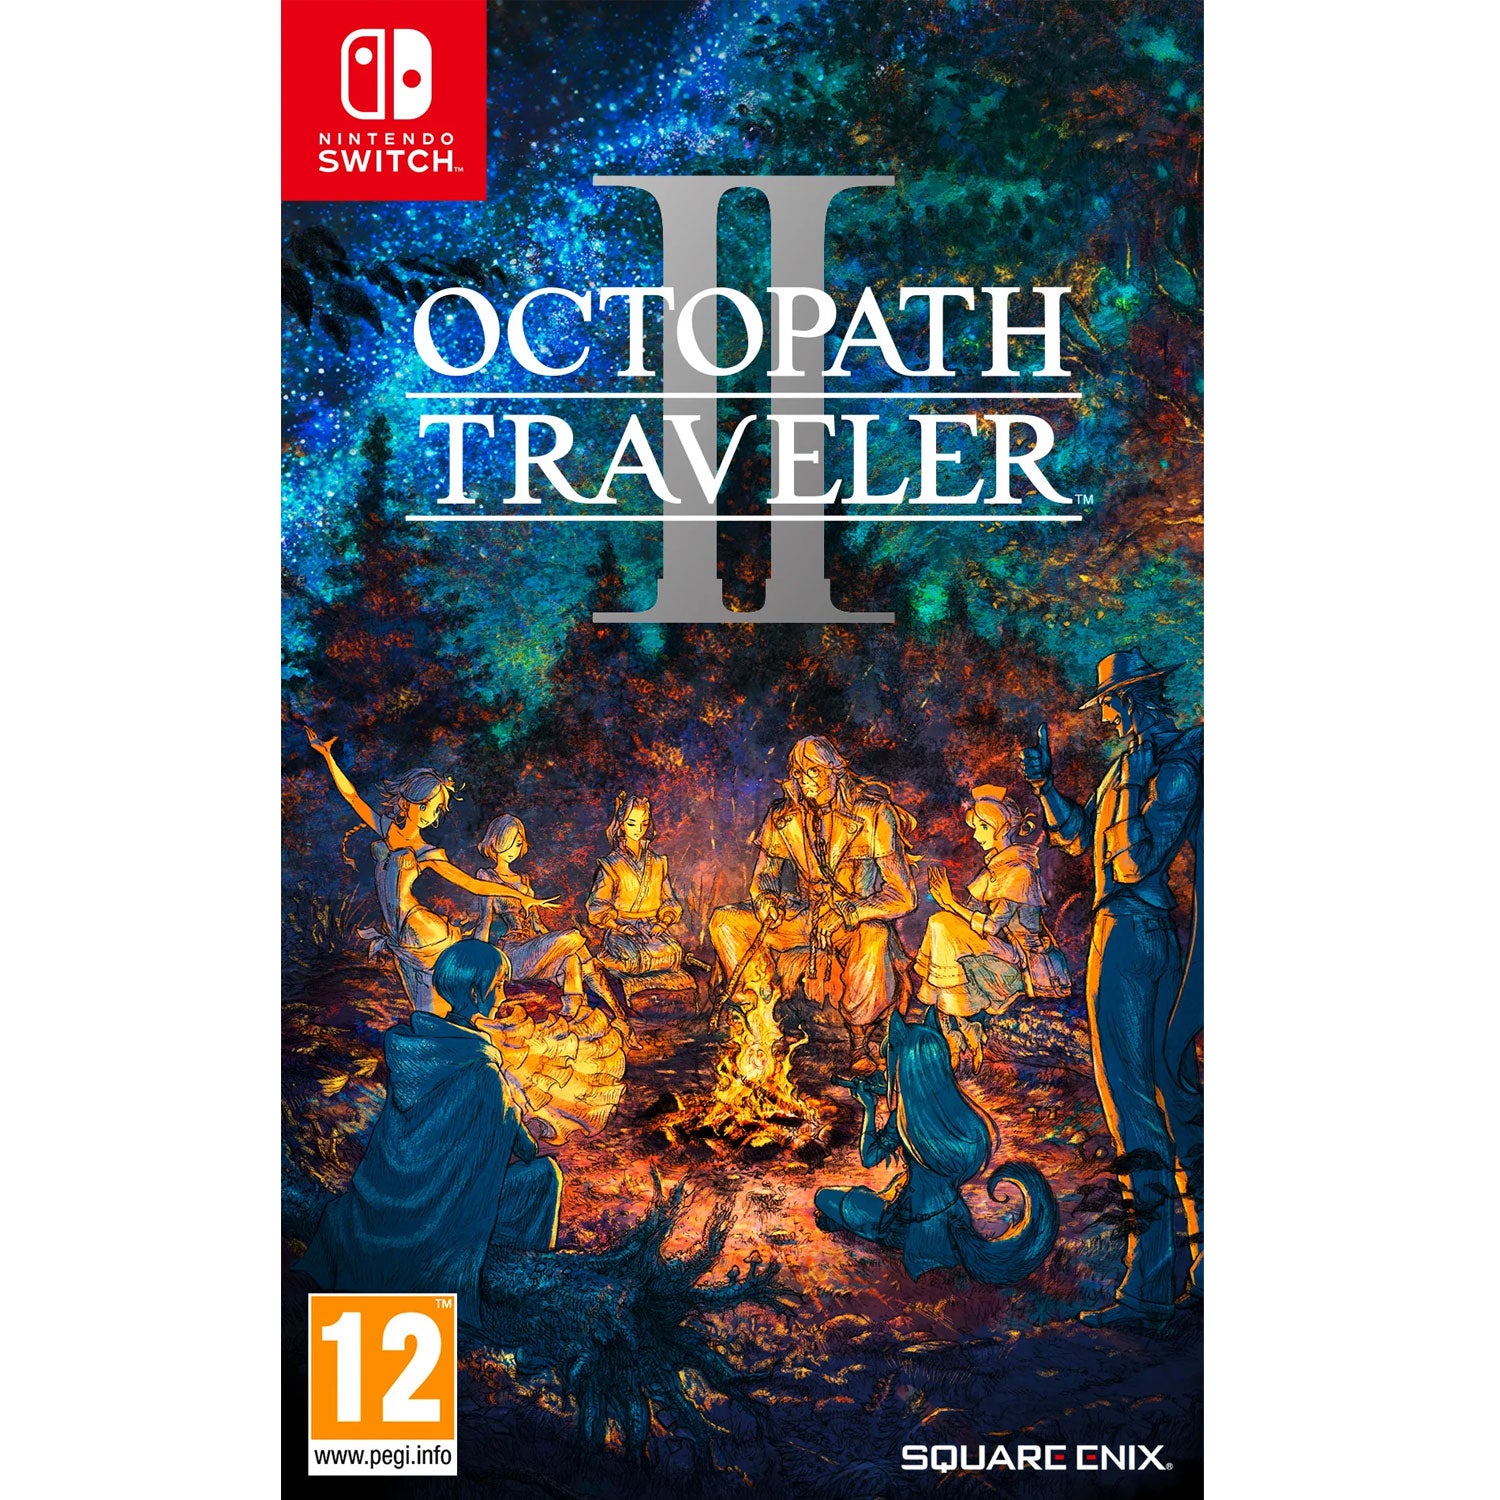 Octopath Traveler 2 PS5 Game 